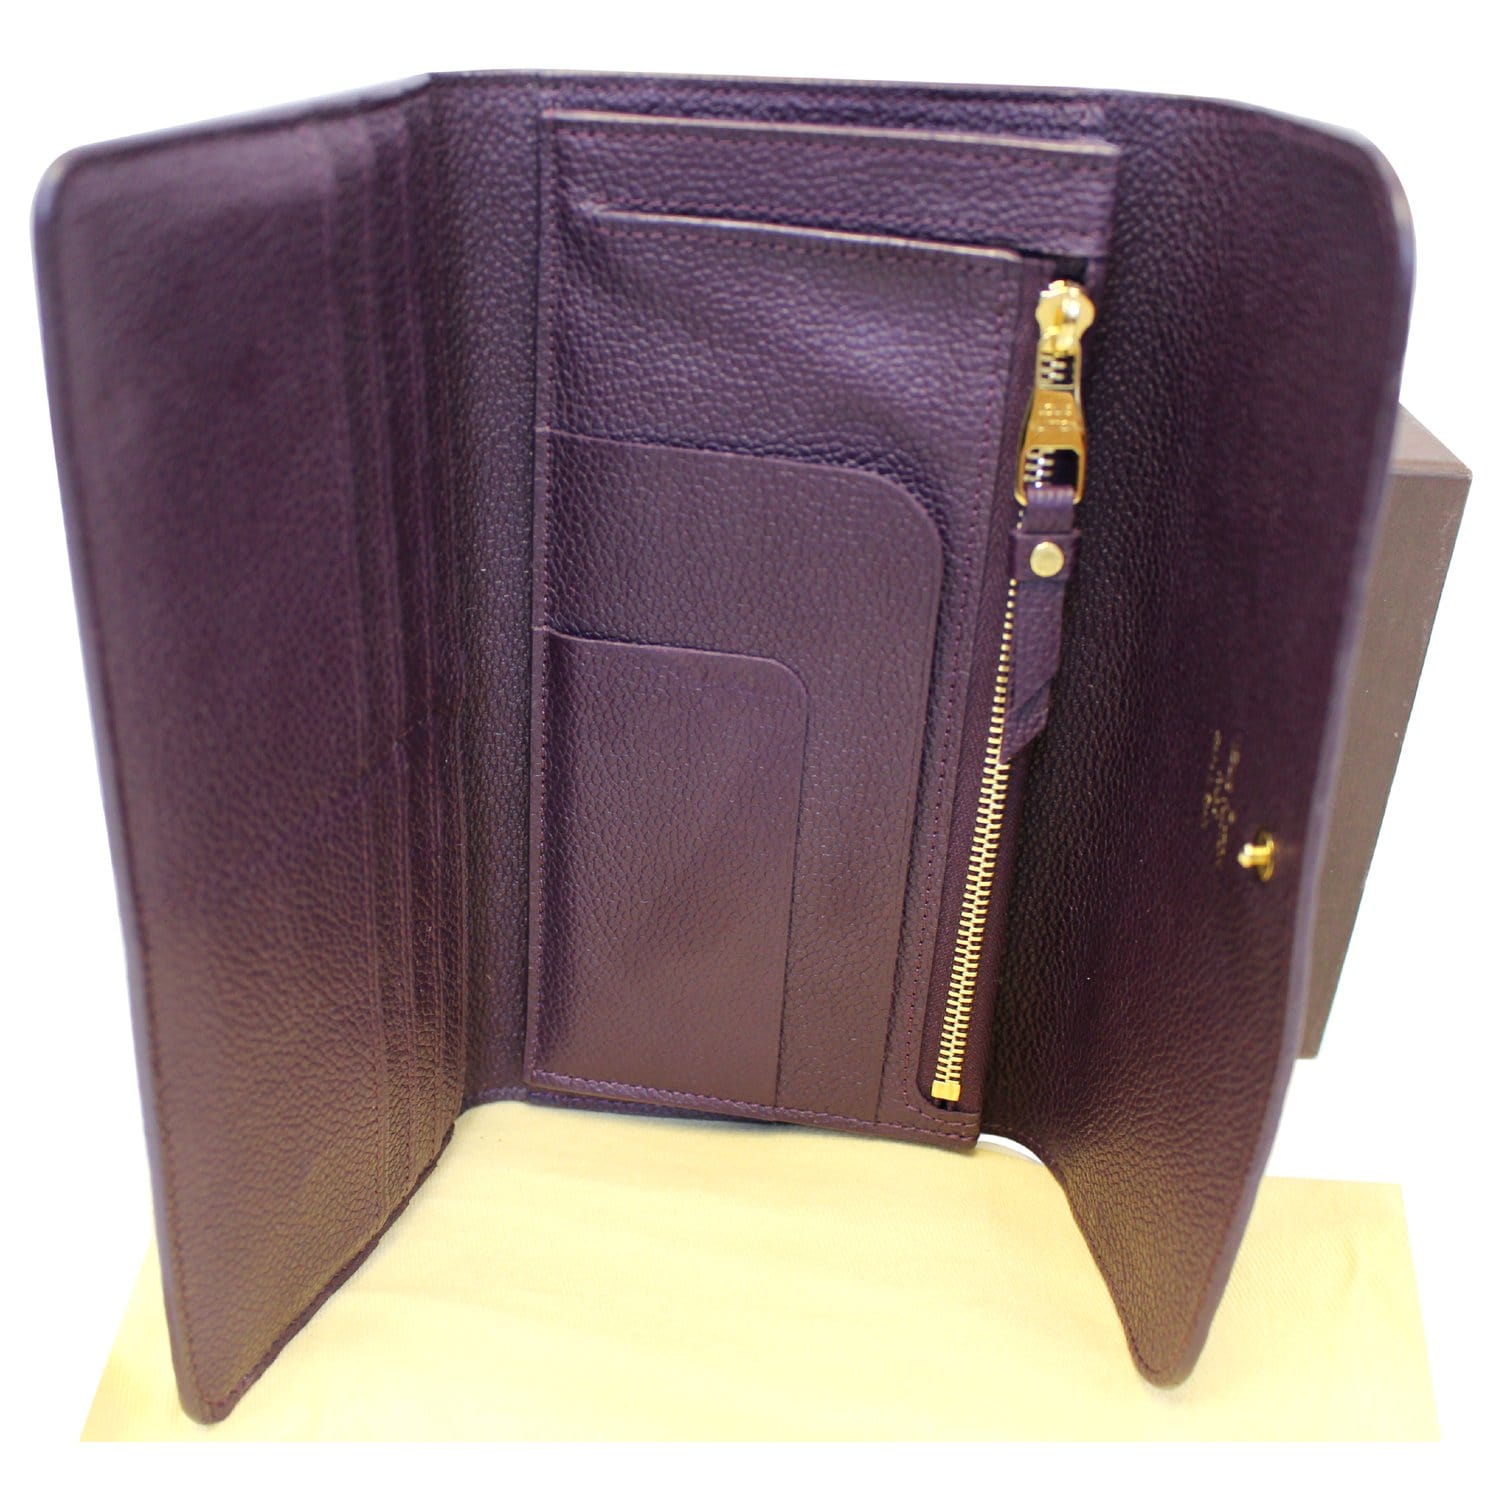 Leather flip flops Louis Vuitton Purple size 40 EU in Leather - 24885340